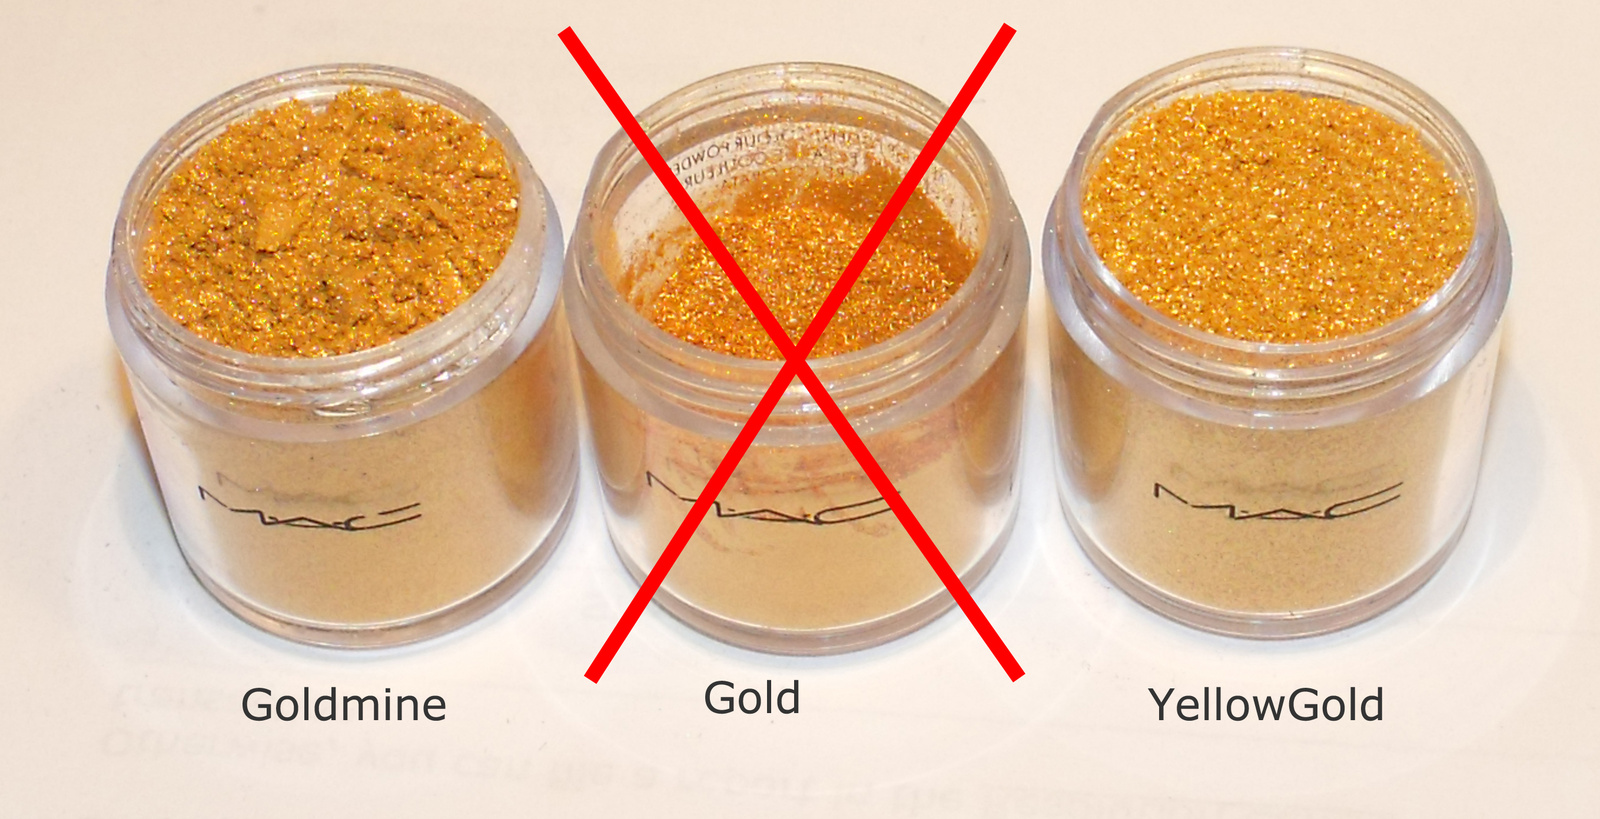 Goldmine - Gold - Yellowgold - 1